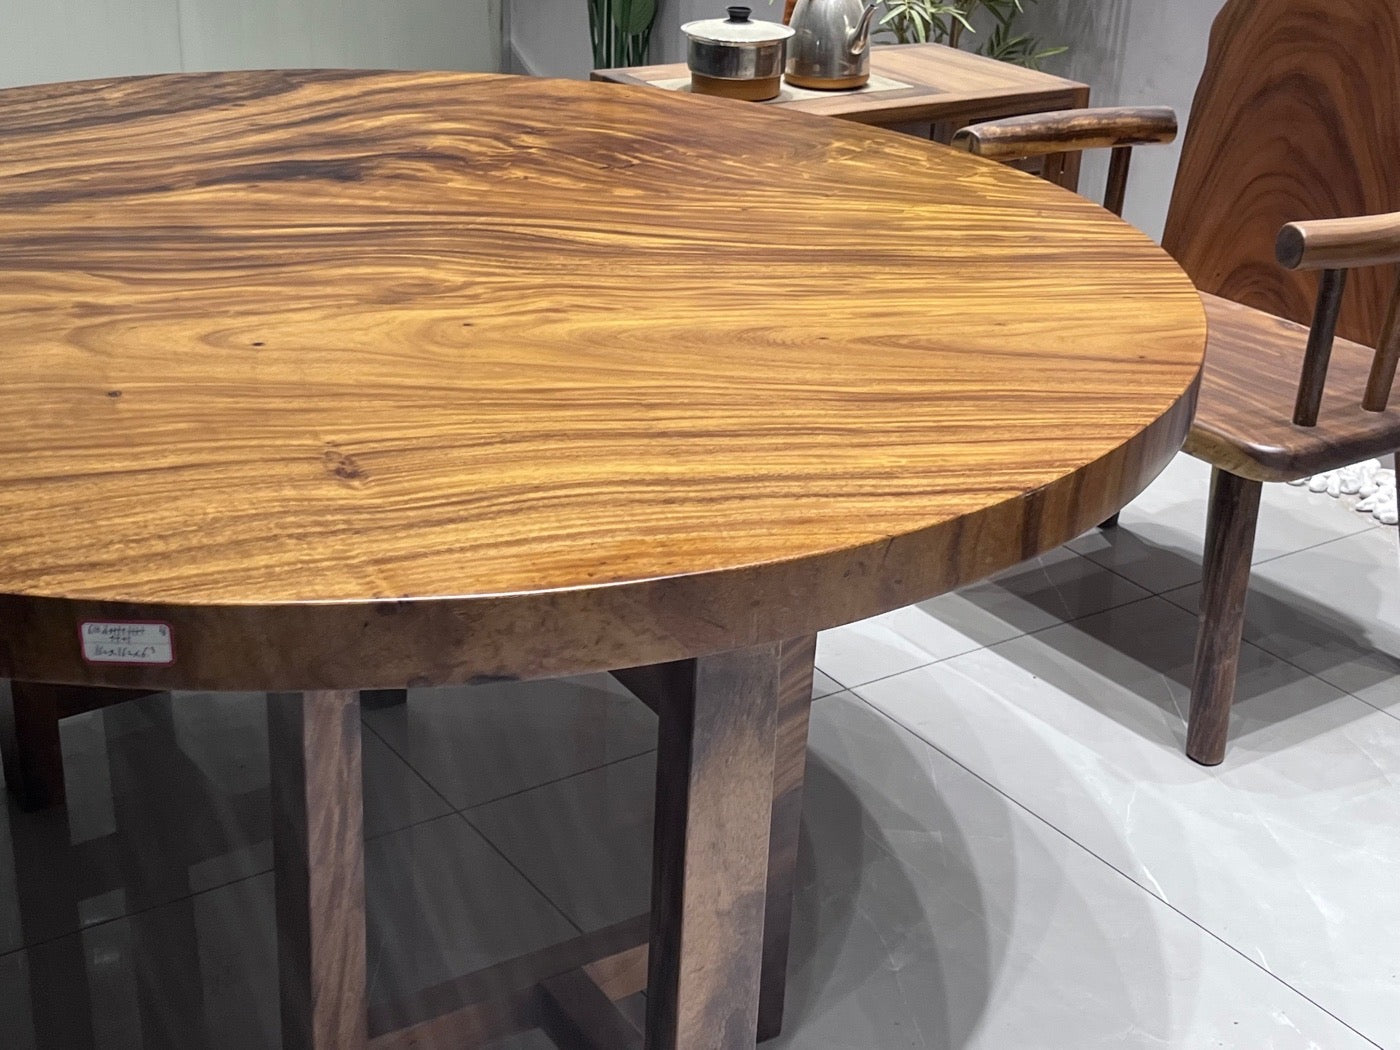 table ronde en bois moderne Monkey pod, table basse ronde en bois